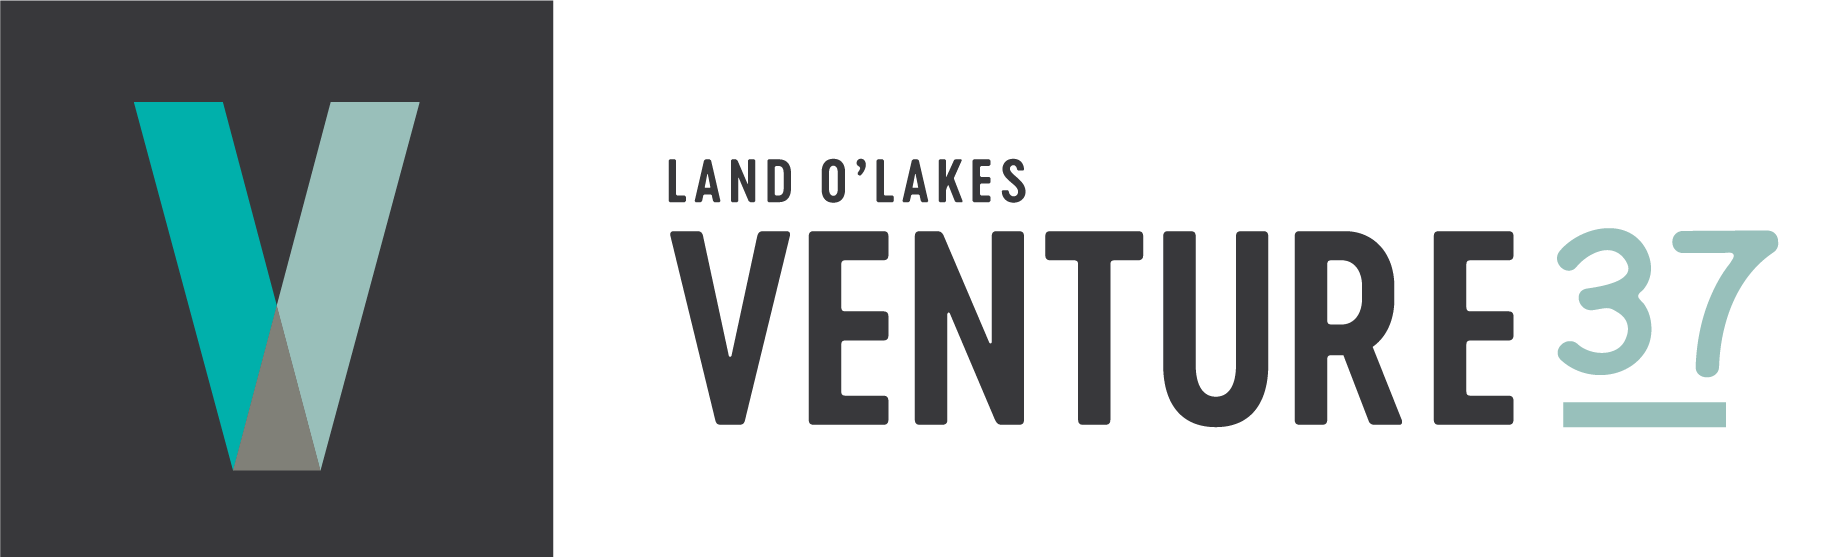 Home | Land O'Lakes Venture37